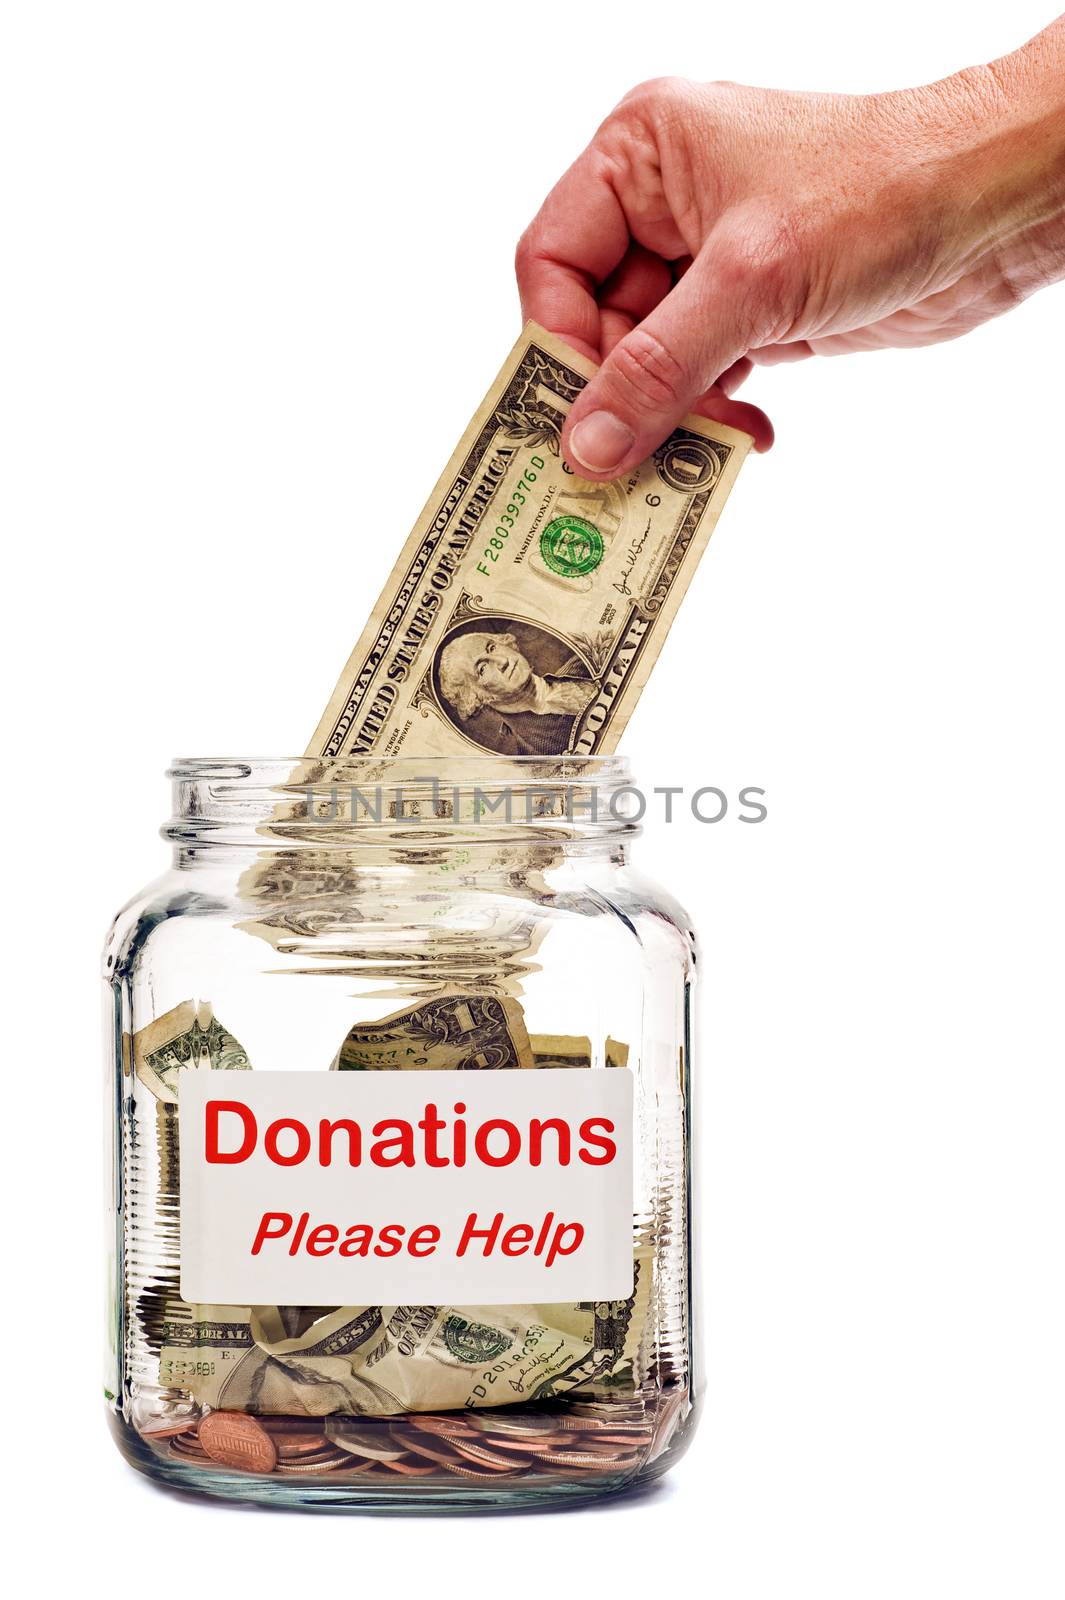 Hand putting money into Donations jar.